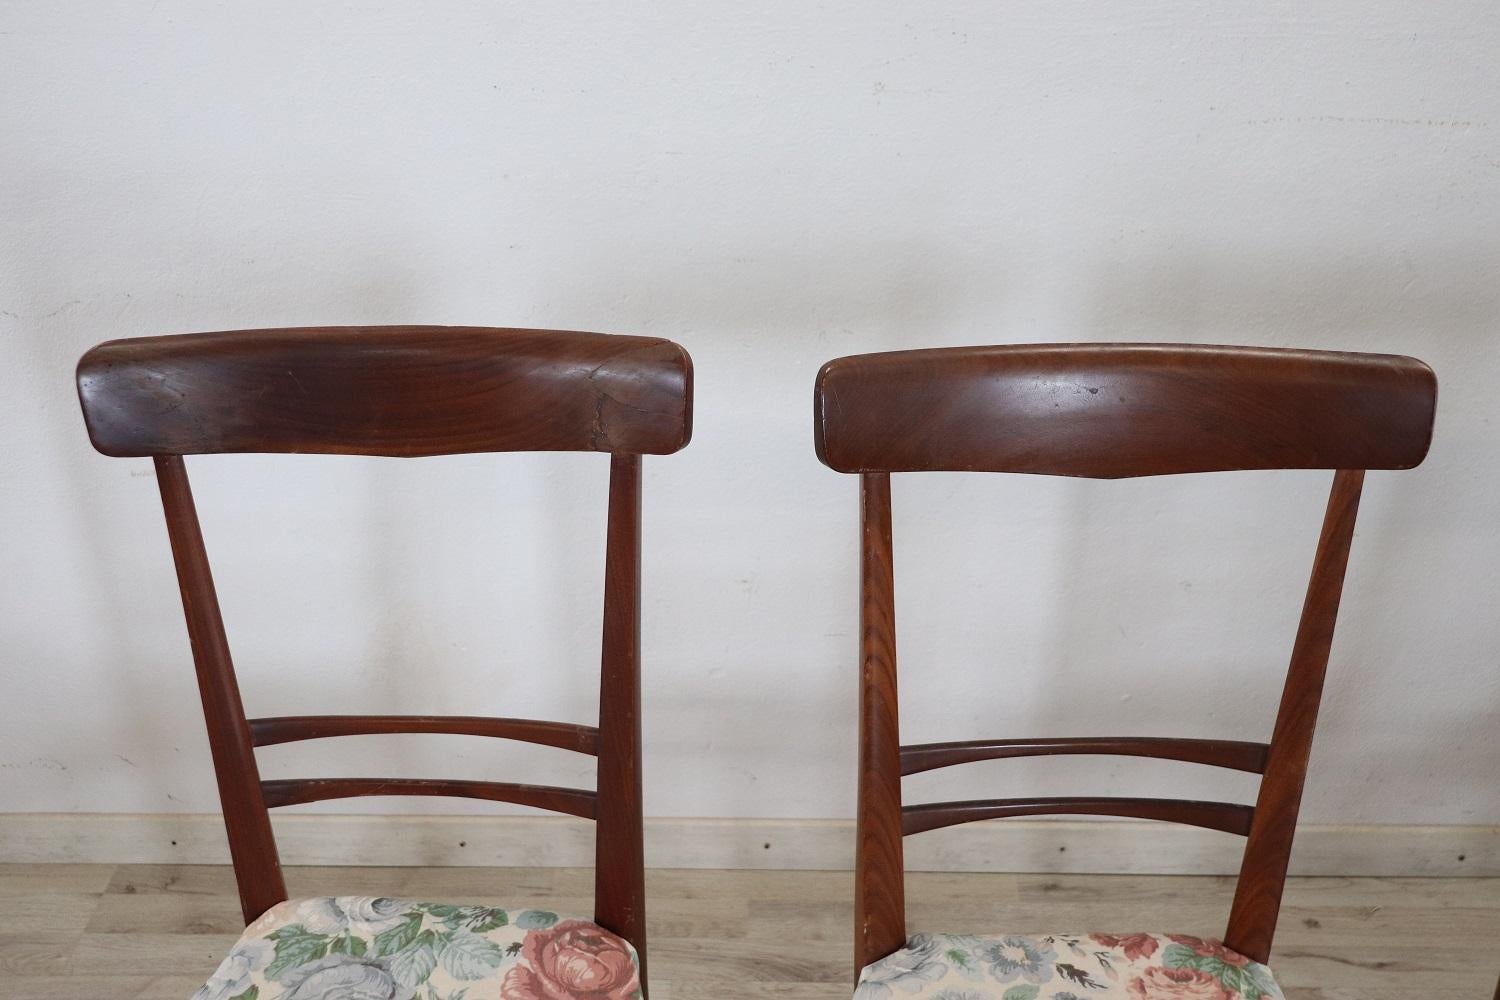 20th Century Italian Design Set of Four Chairs in Teak, Ico Parisi 1950s For Sale 2